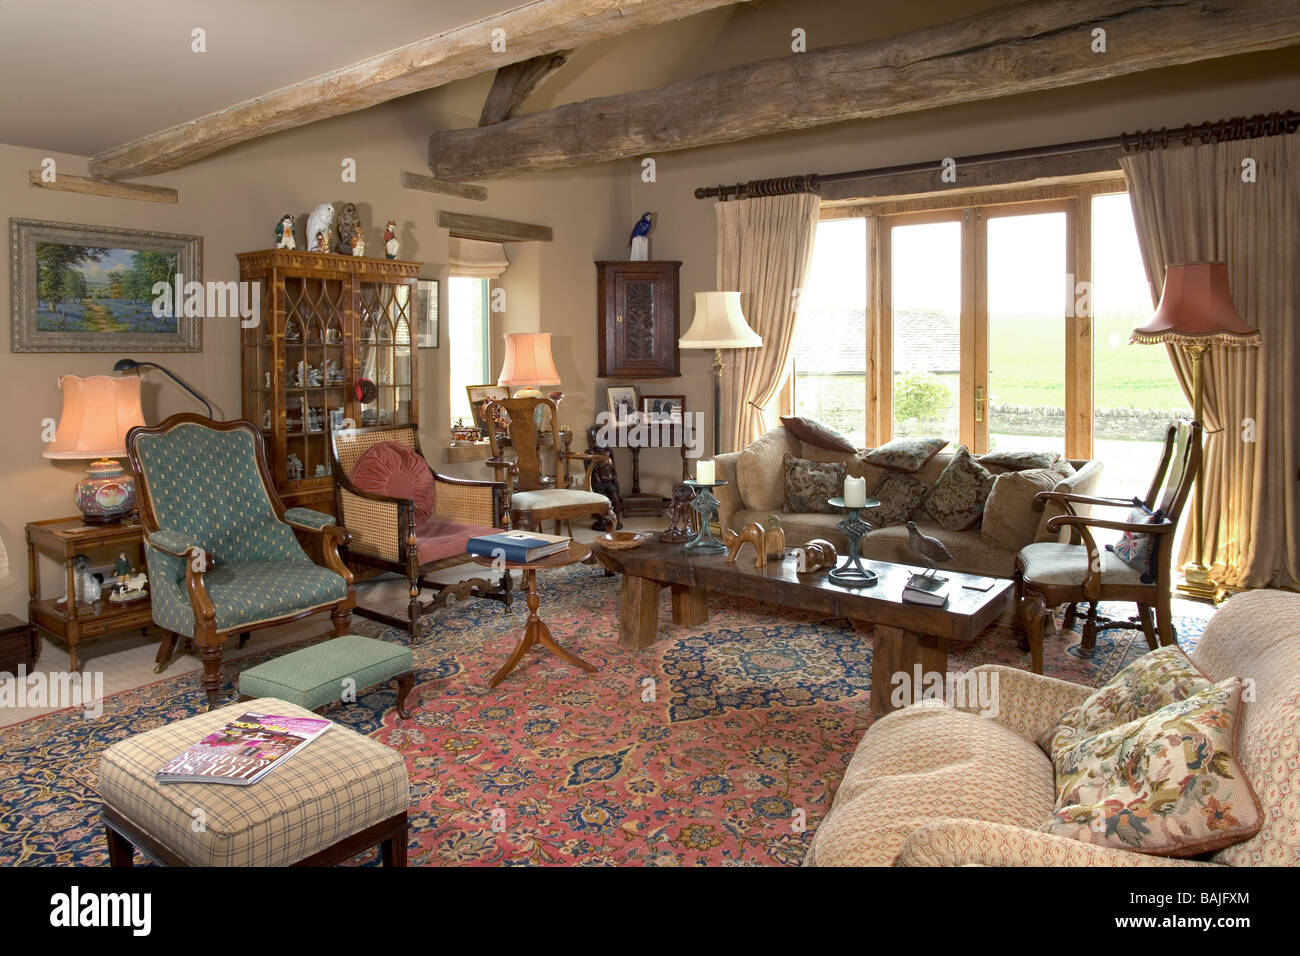 UK. A traditional British living room interior design. Stock Photo